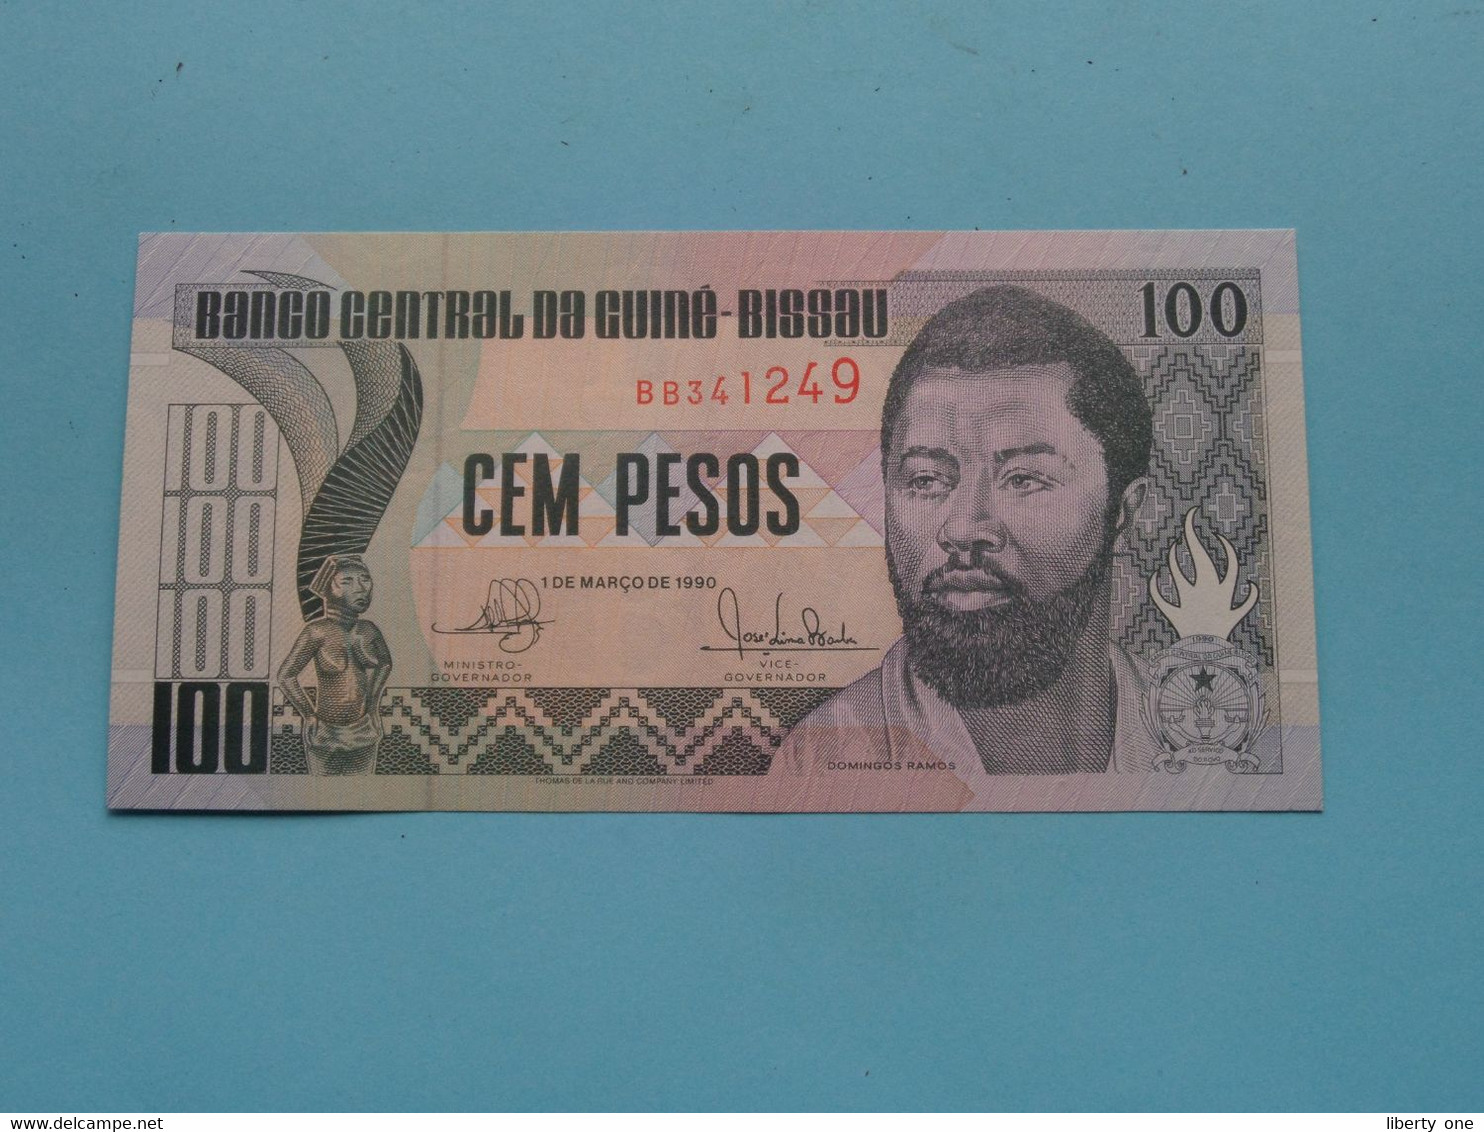 100 (Cem) Pesos (BB341249) 1990 > Banco Central Da Guiné-Bissau ( For Grade, Please See Photo ) UNC ! - Guinea–Bissau